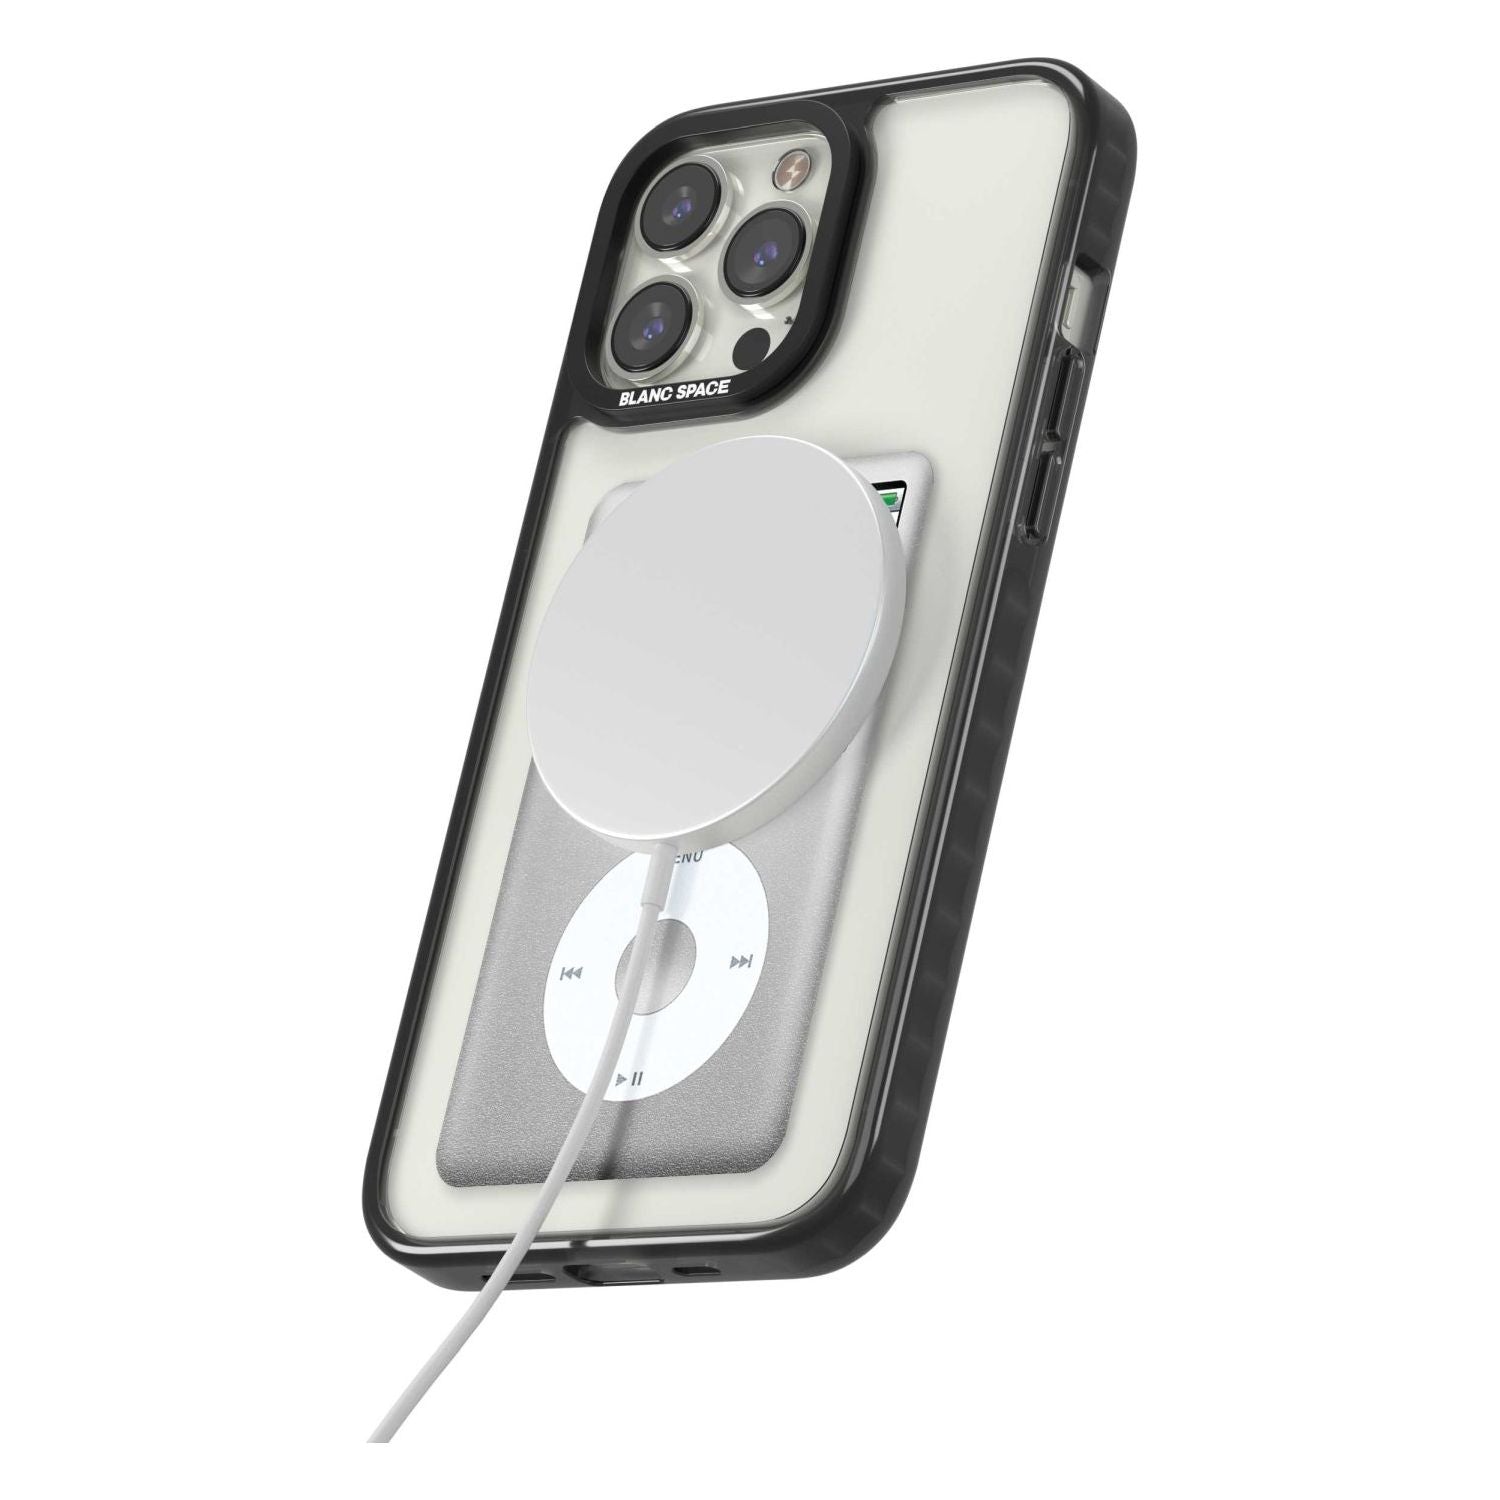 Personalised Classic iPod